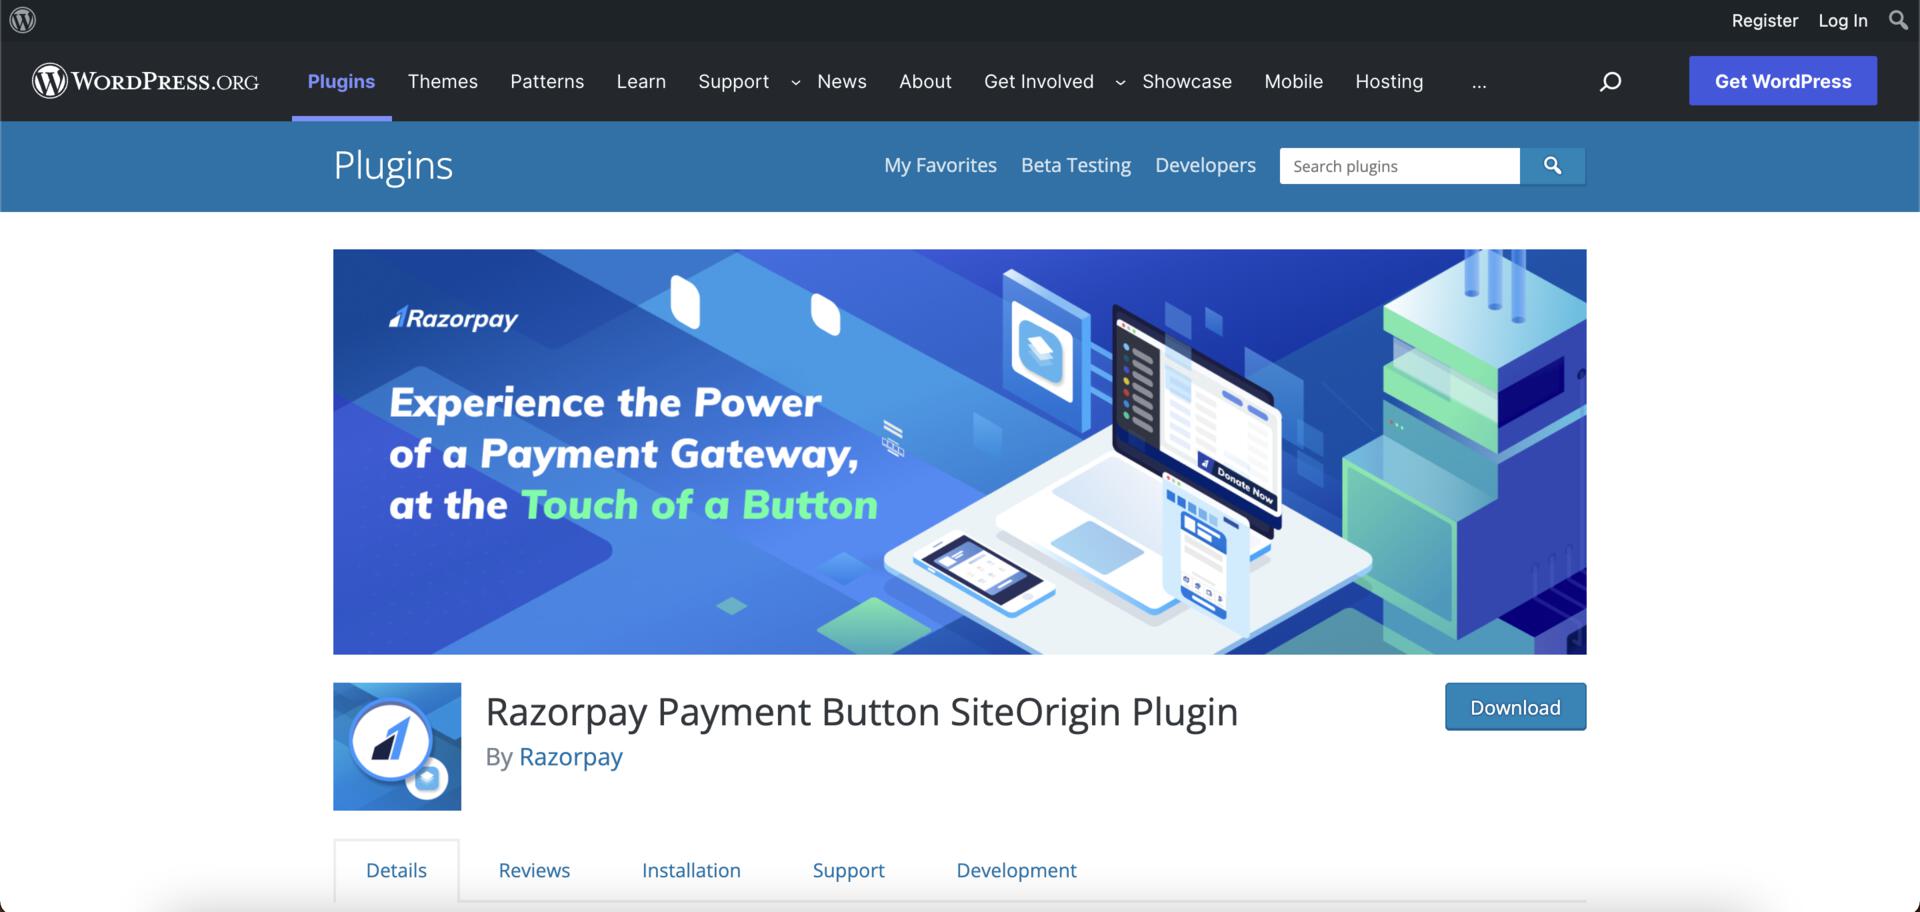 Razorpay Payment Button SiteOrigin Plugin